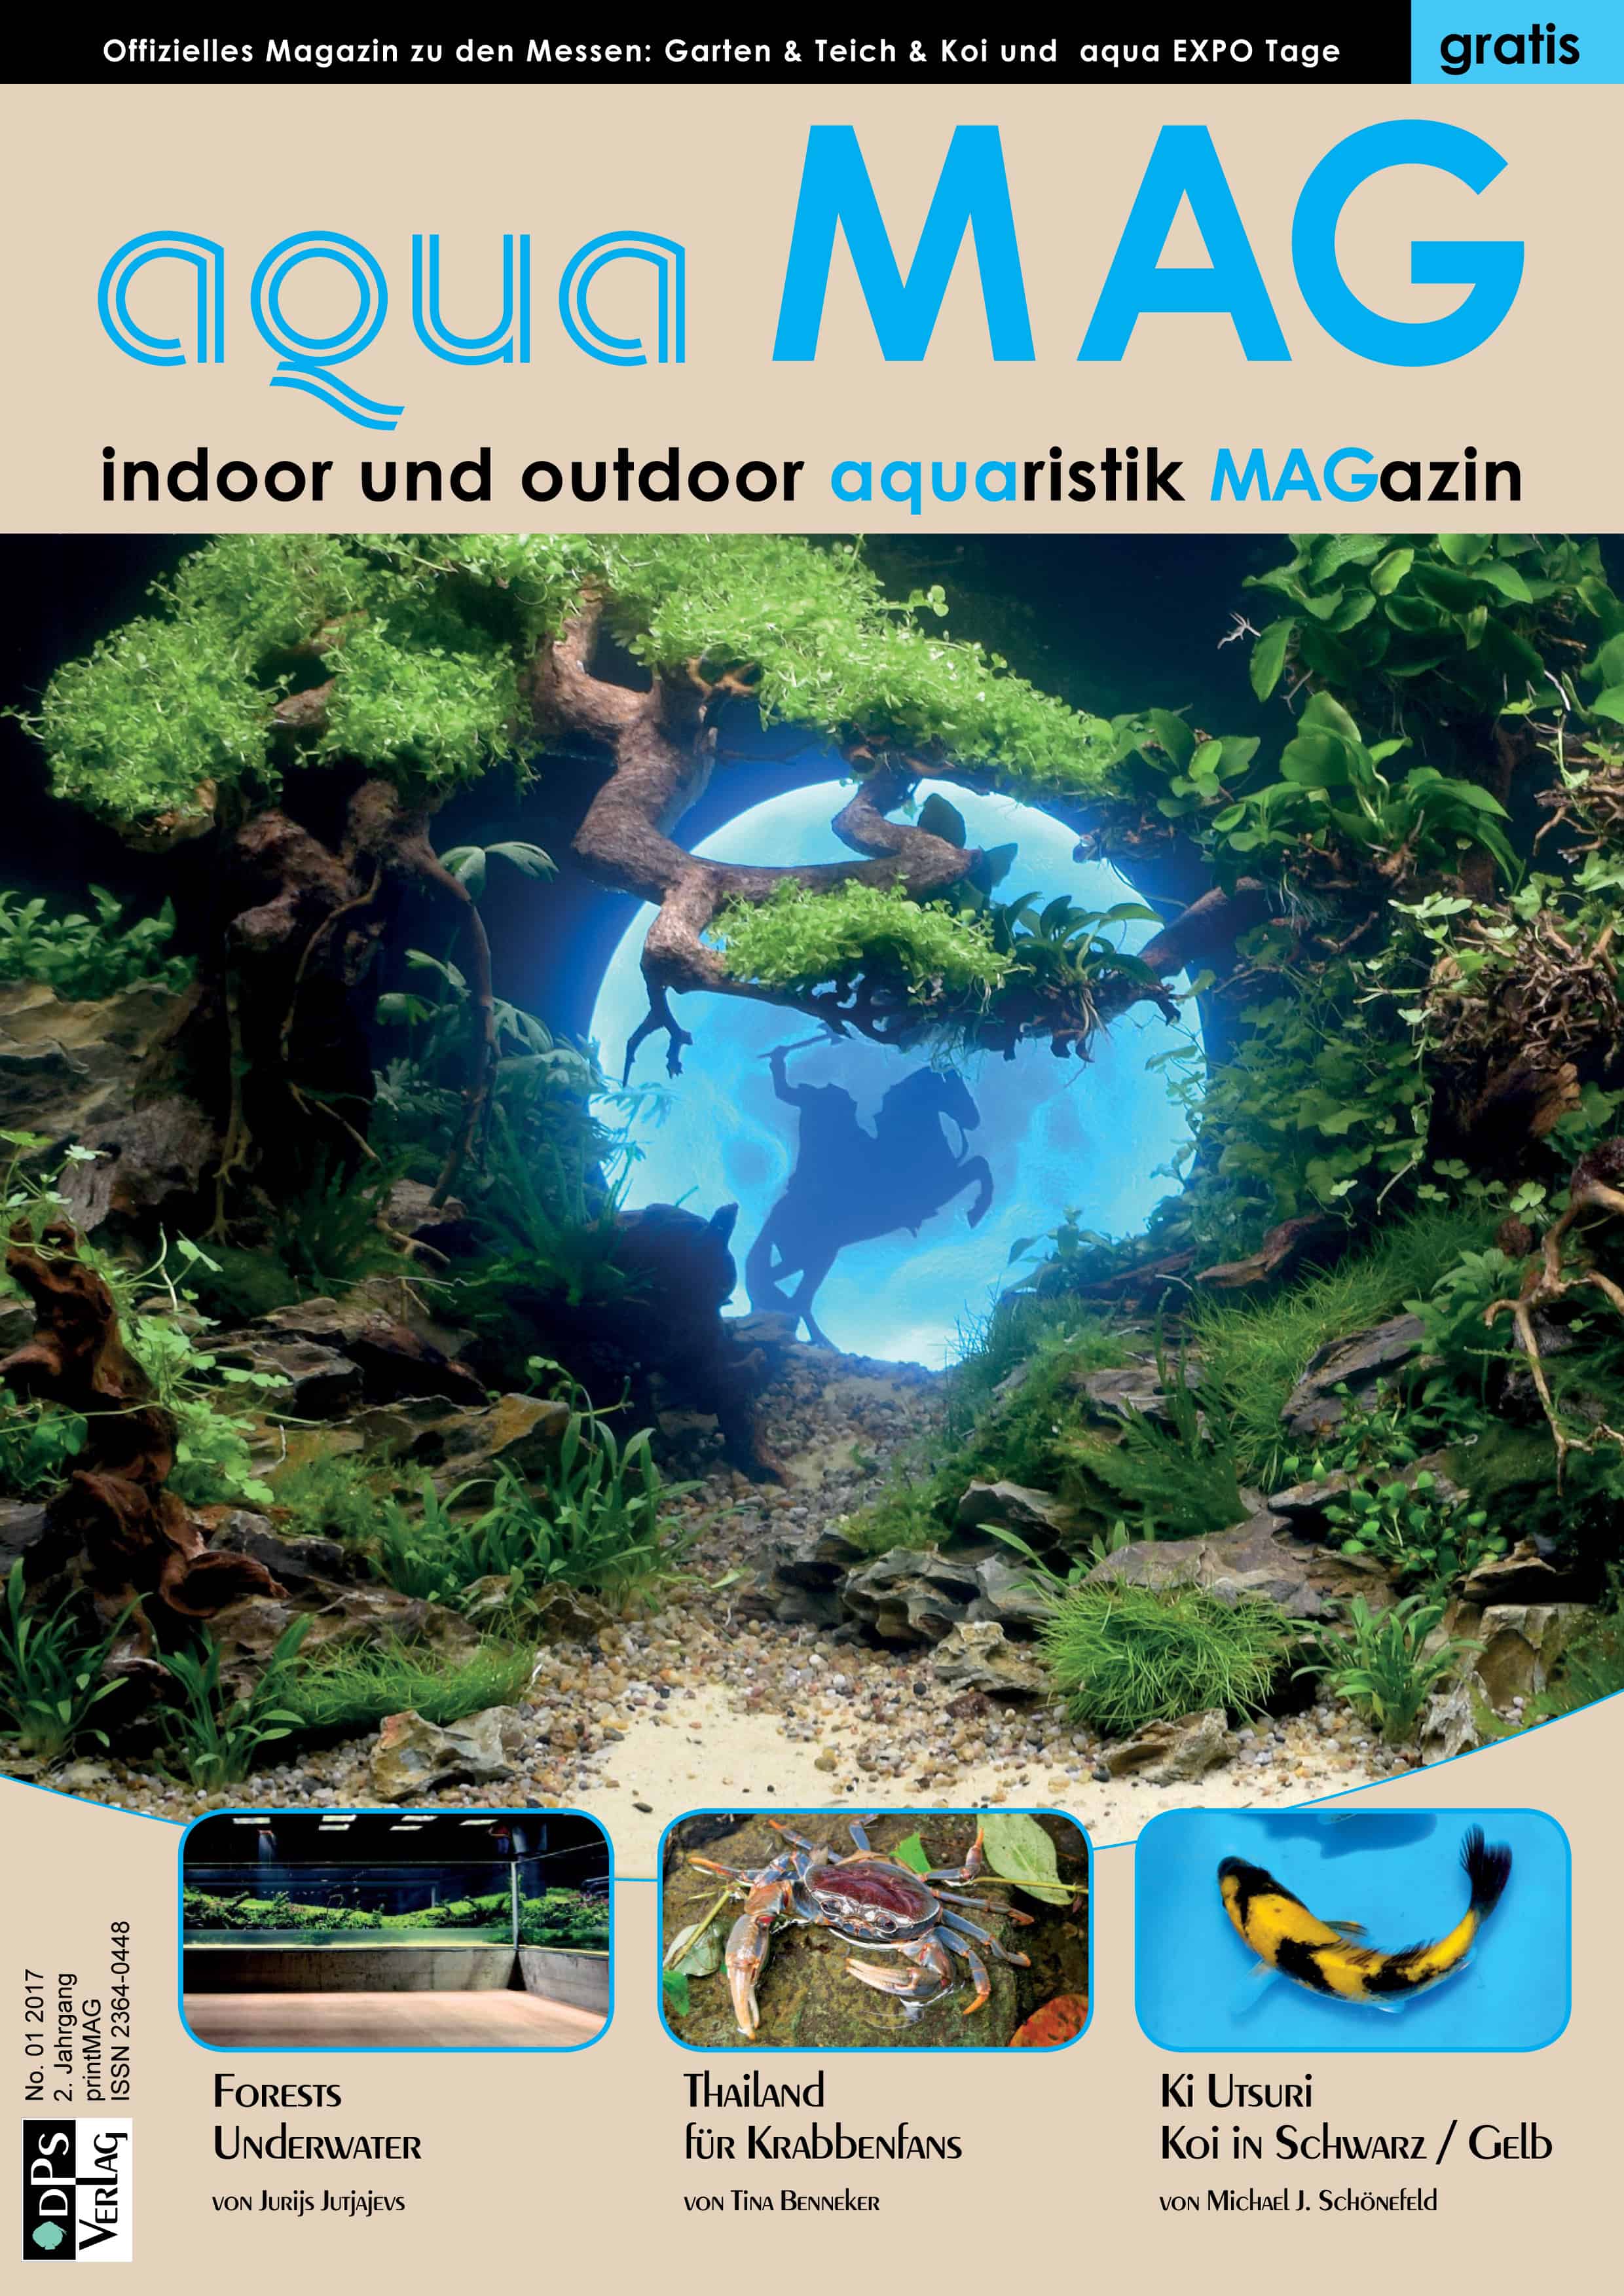 aqua MAG No 3 ist erschienen - Das Indoor und Outdoor Aquaristik MAGazin